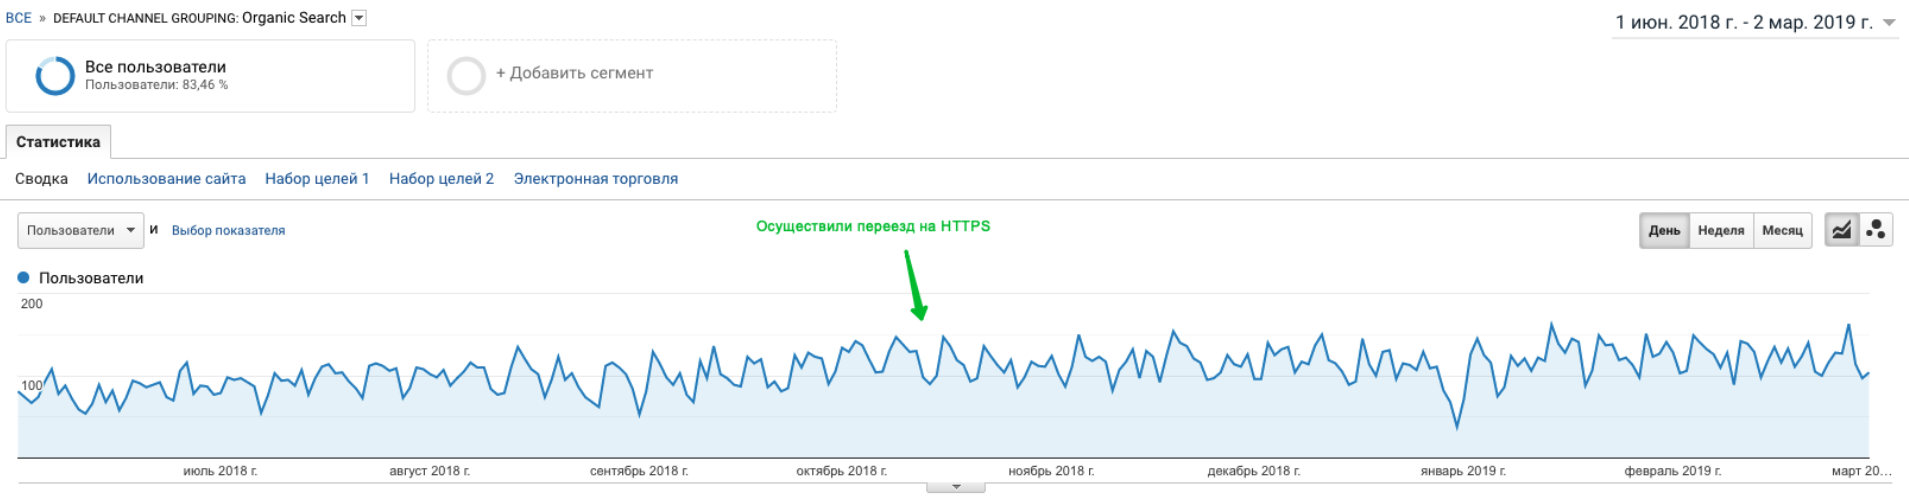 Показатели роста органического трафика на сайт smart-service.ua после переезда на HTTPS